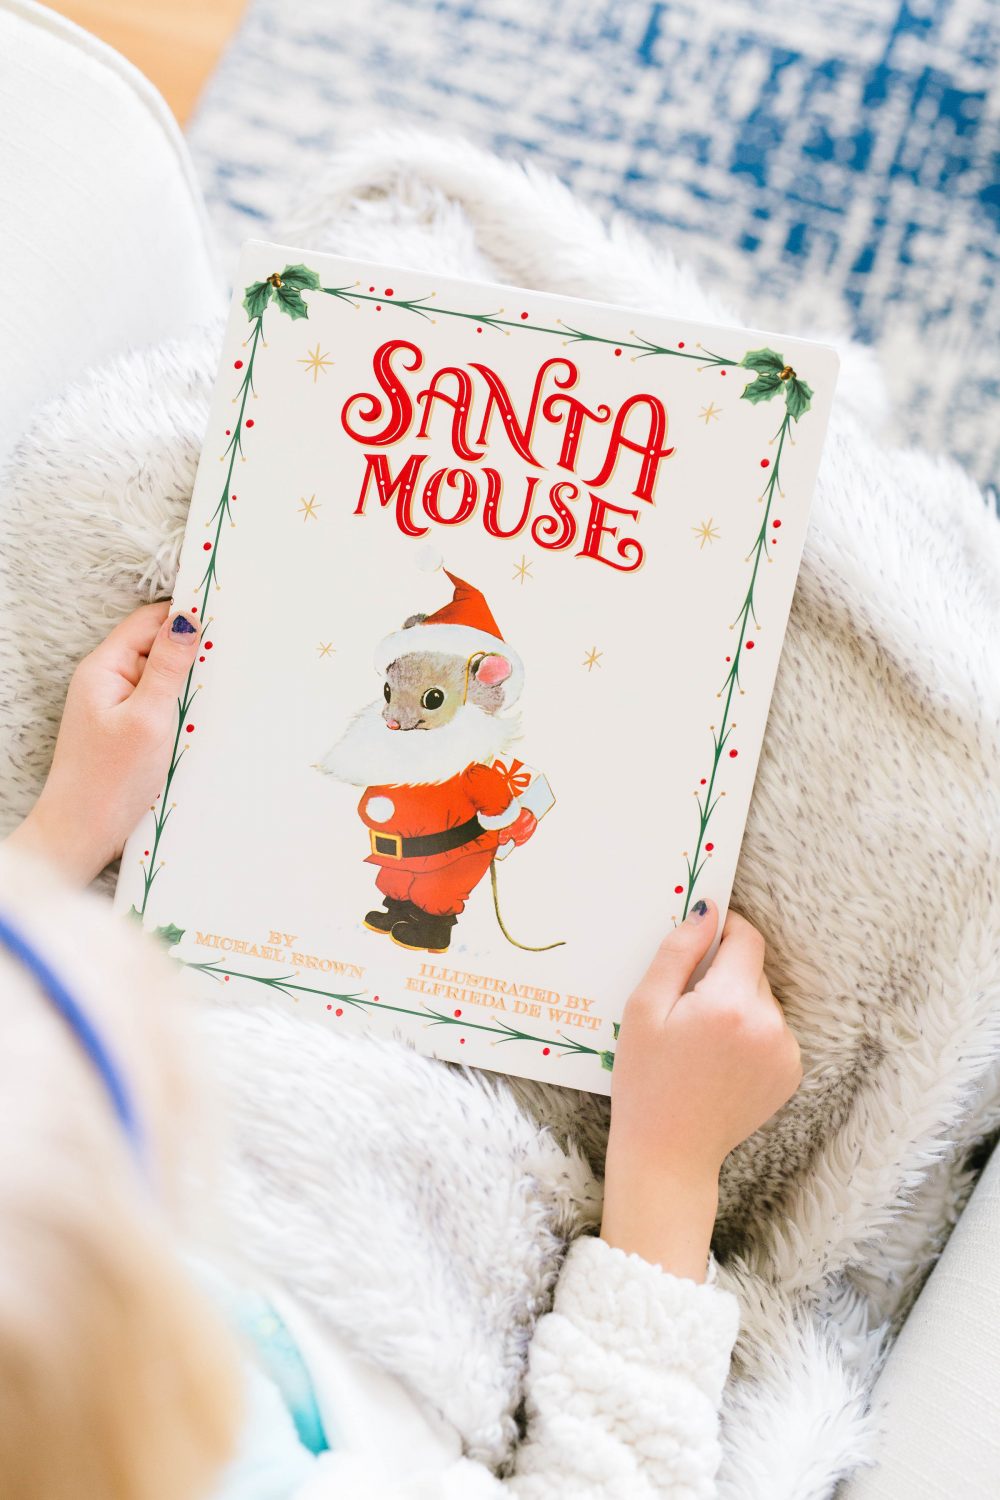 books about Santa Claus